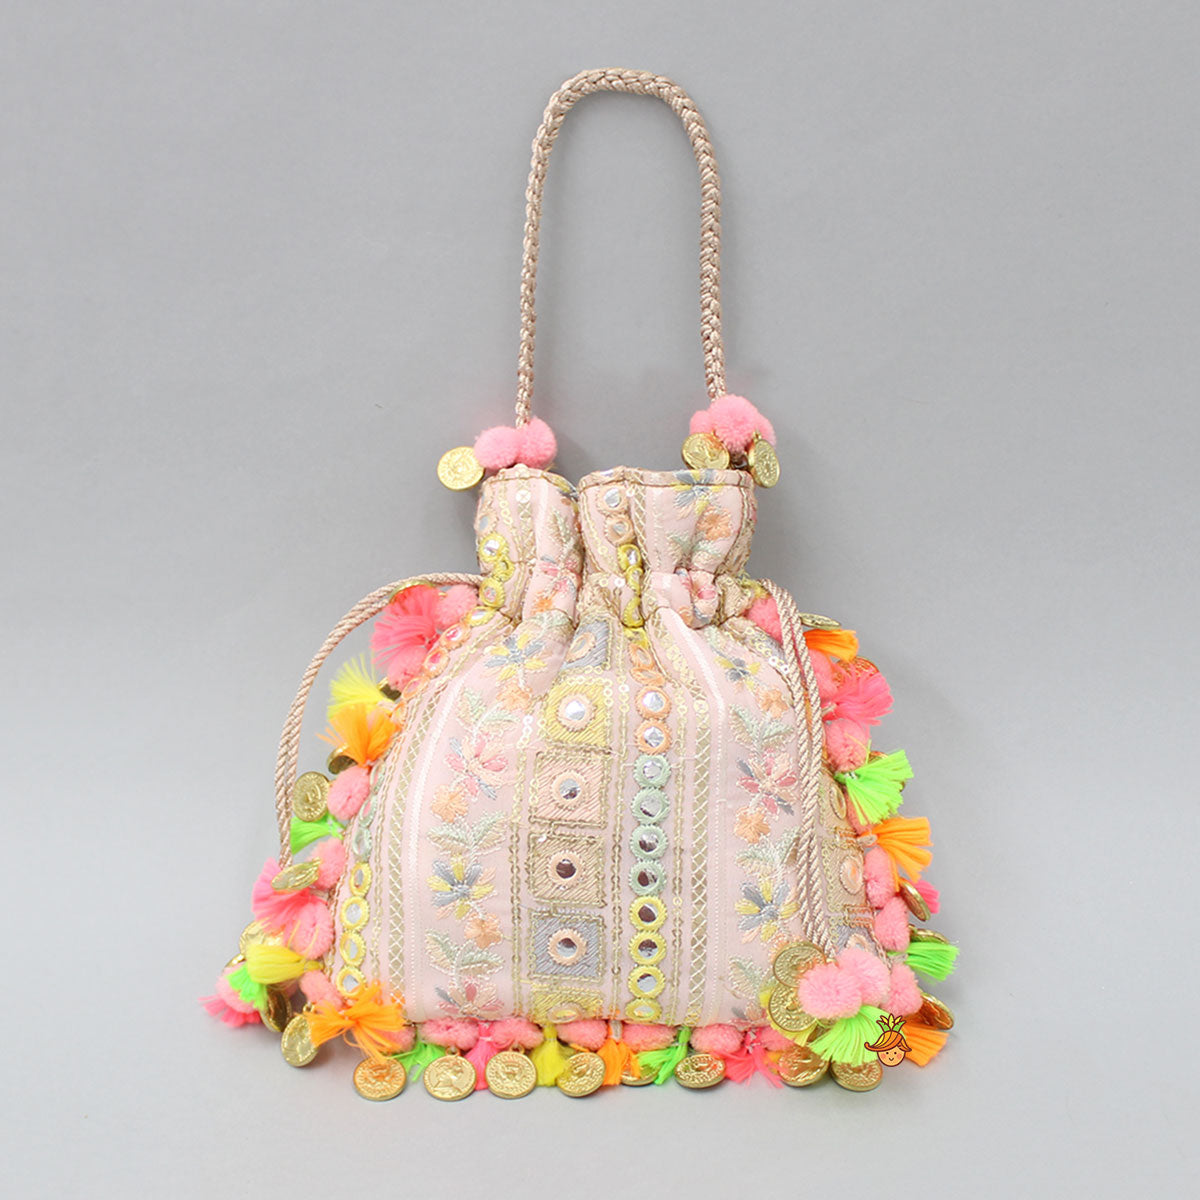 Pre Order: Stunning Embroidered Pom Poms And Fringed Tassels Detailed Potli Bag